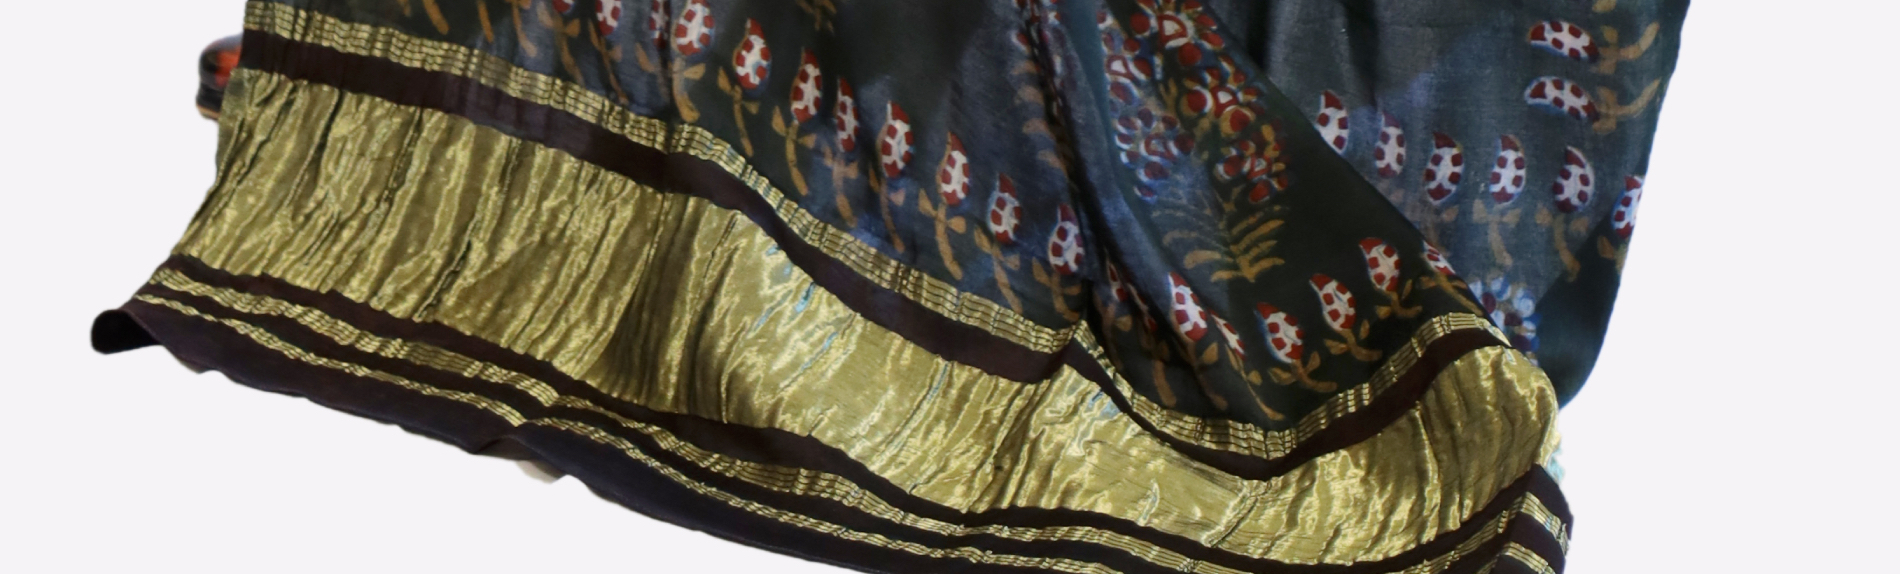 Nandana hand block printed textiles: The forgotten cultural legacy of  Madhya Pradesh – Handicrafts and Carpet Sector Skill Council